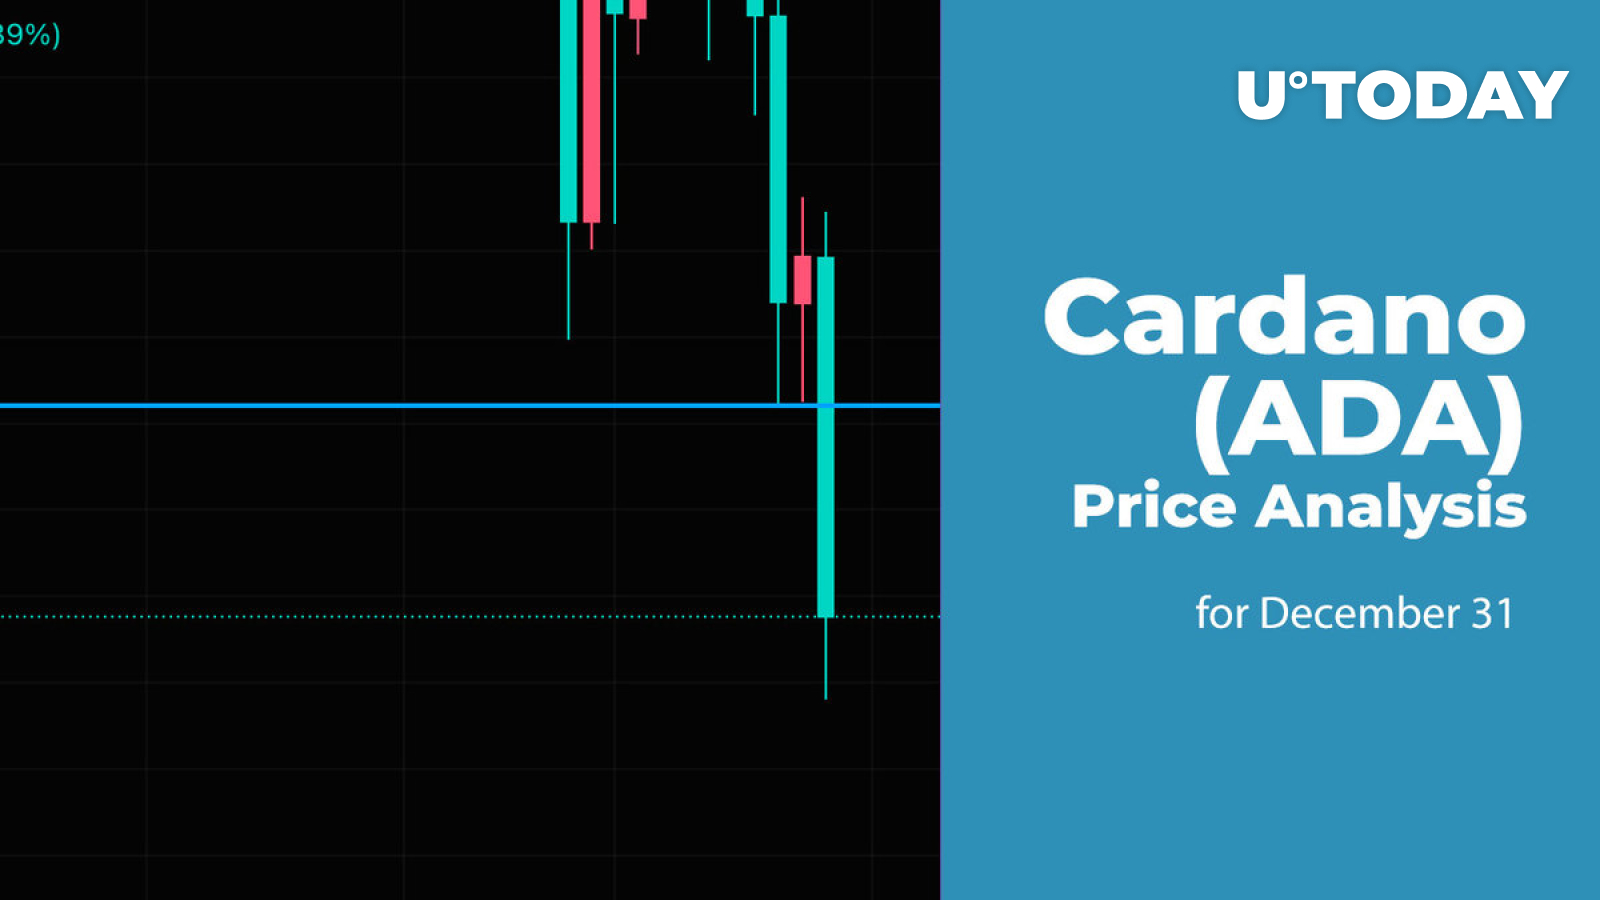 Cardano (ADA) Price Analysis for December 31